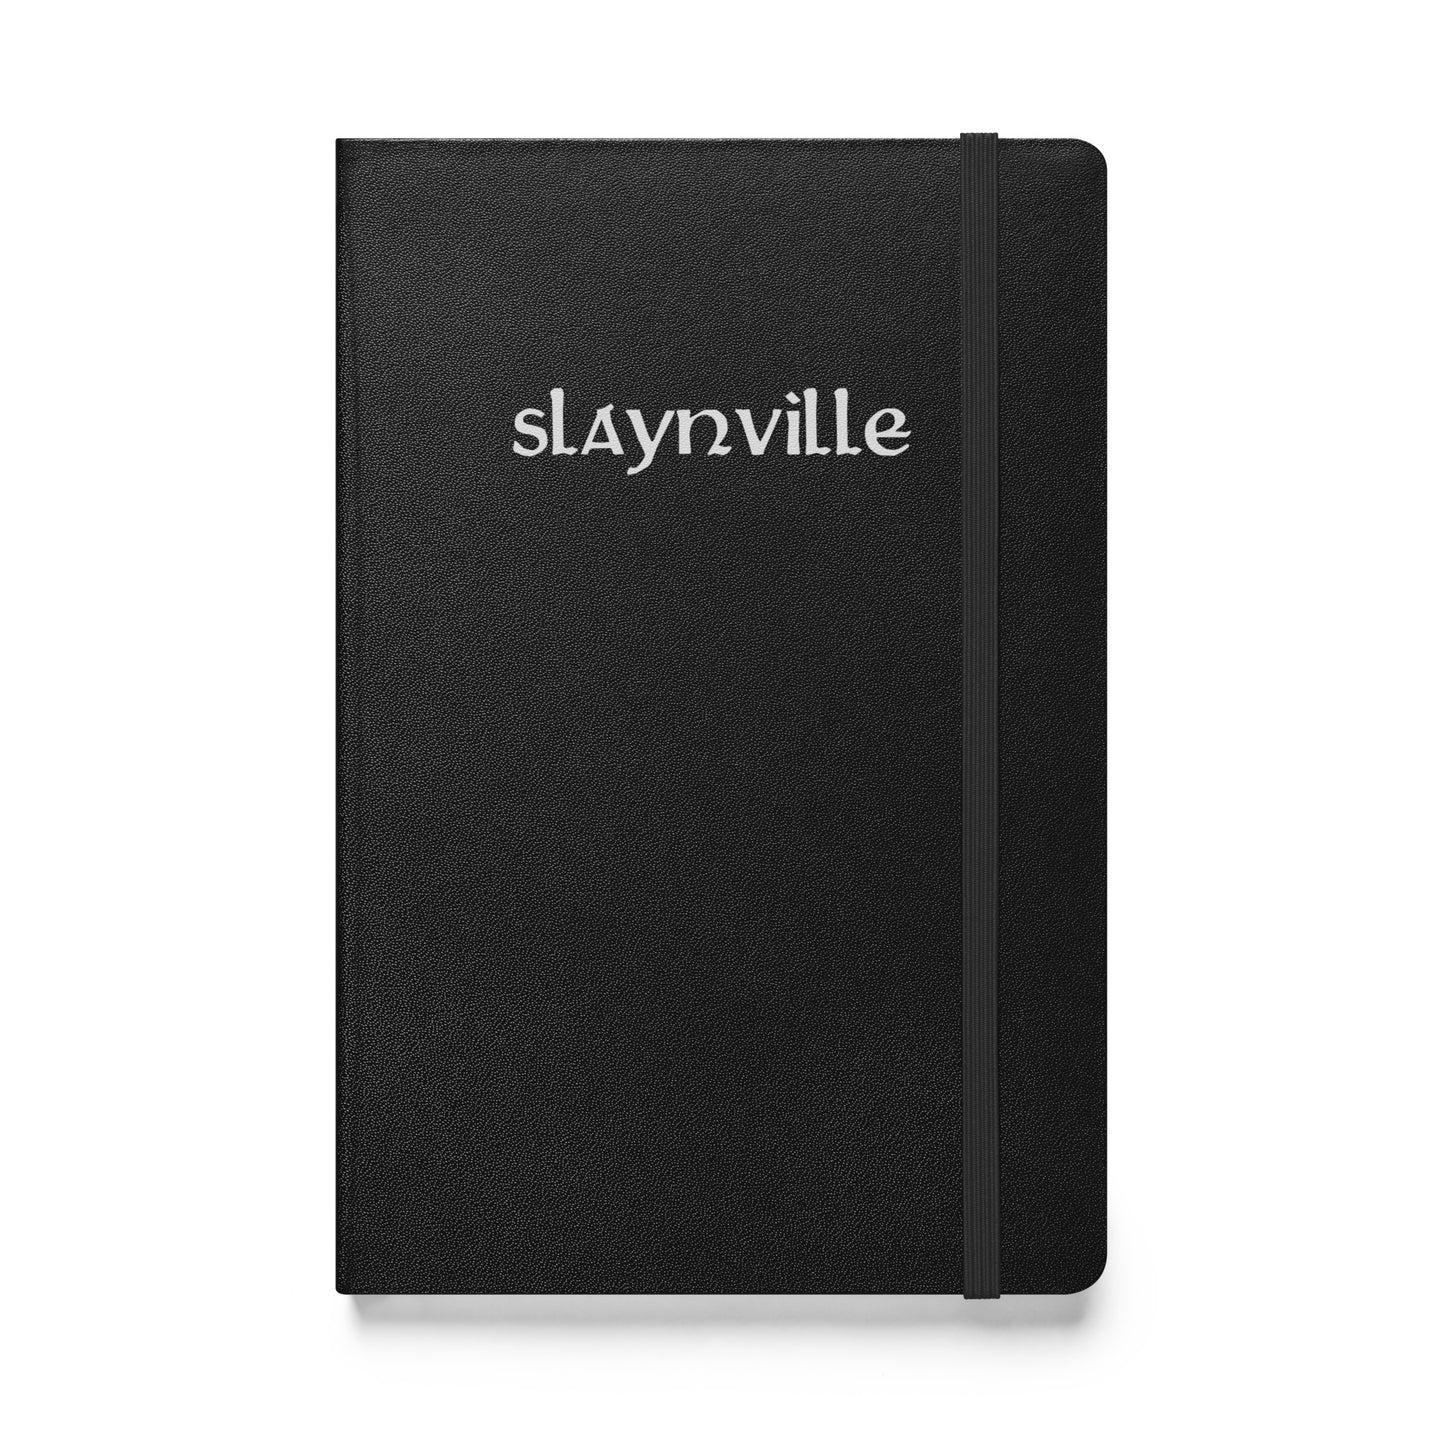 Slaynville Hardcover Bound Notebook